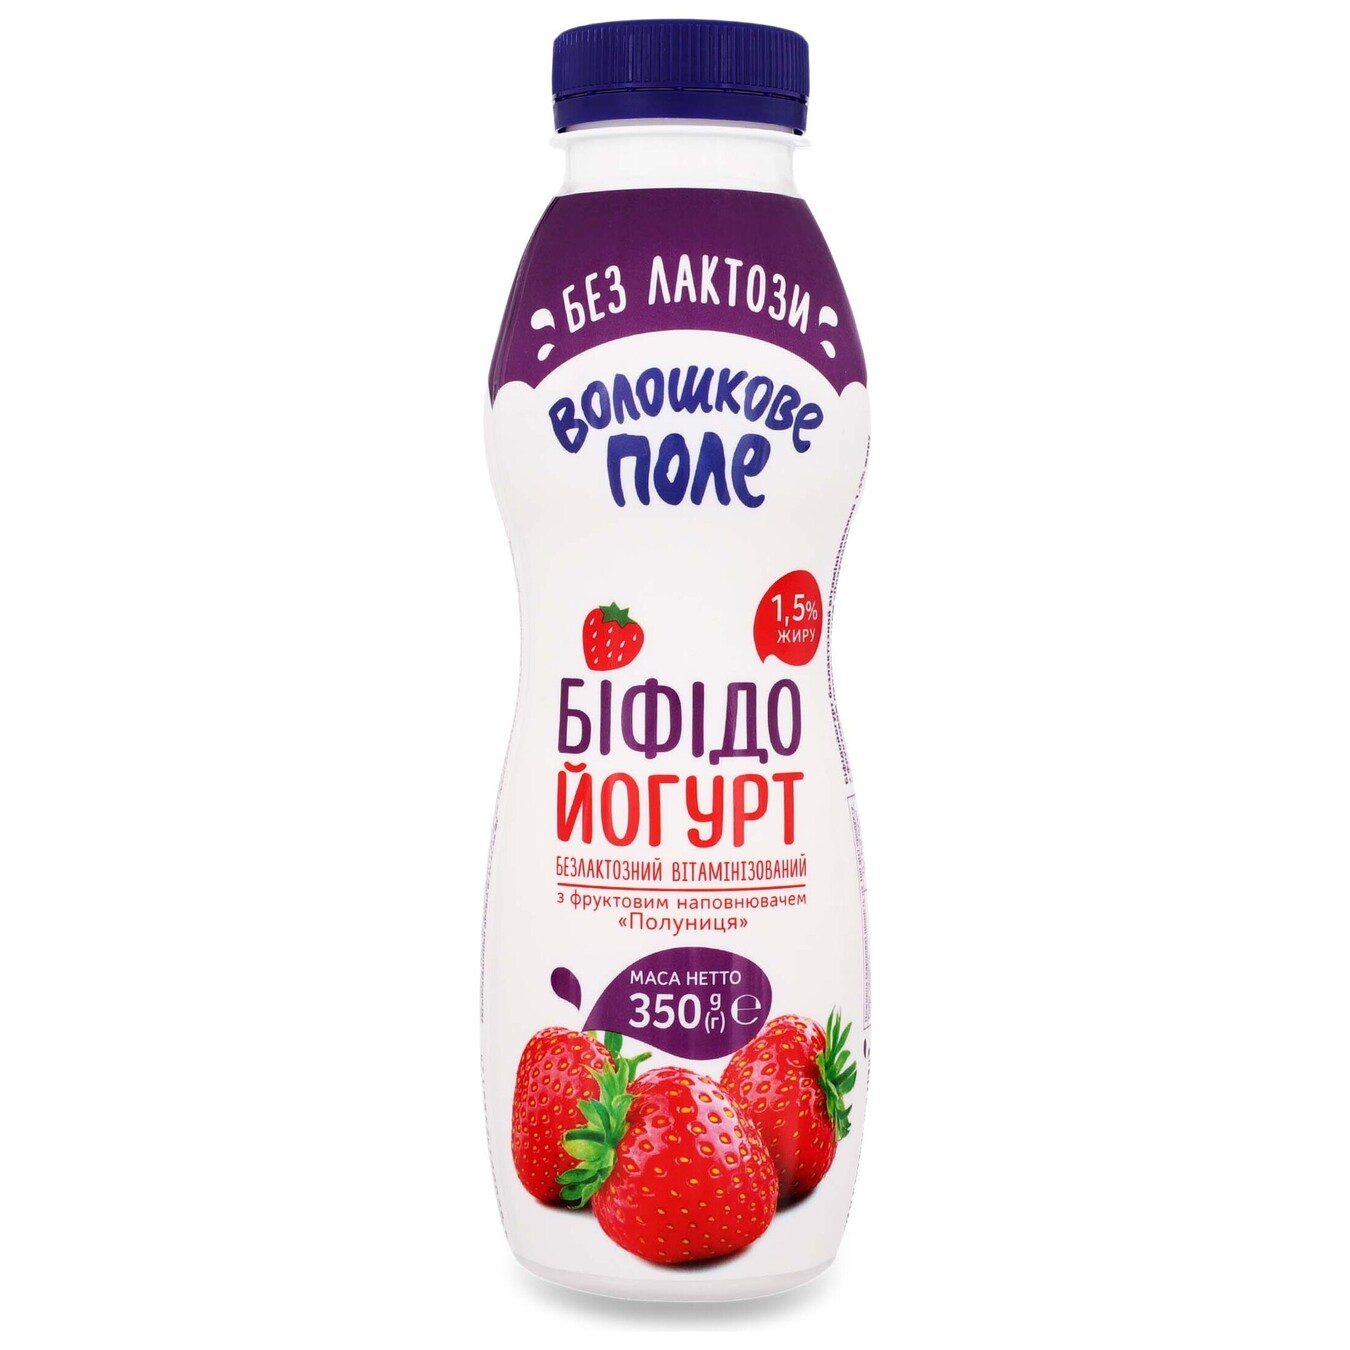 Voloshkove Pole Bifidoyogurt Strawberry lactose-free 1,5% 350g